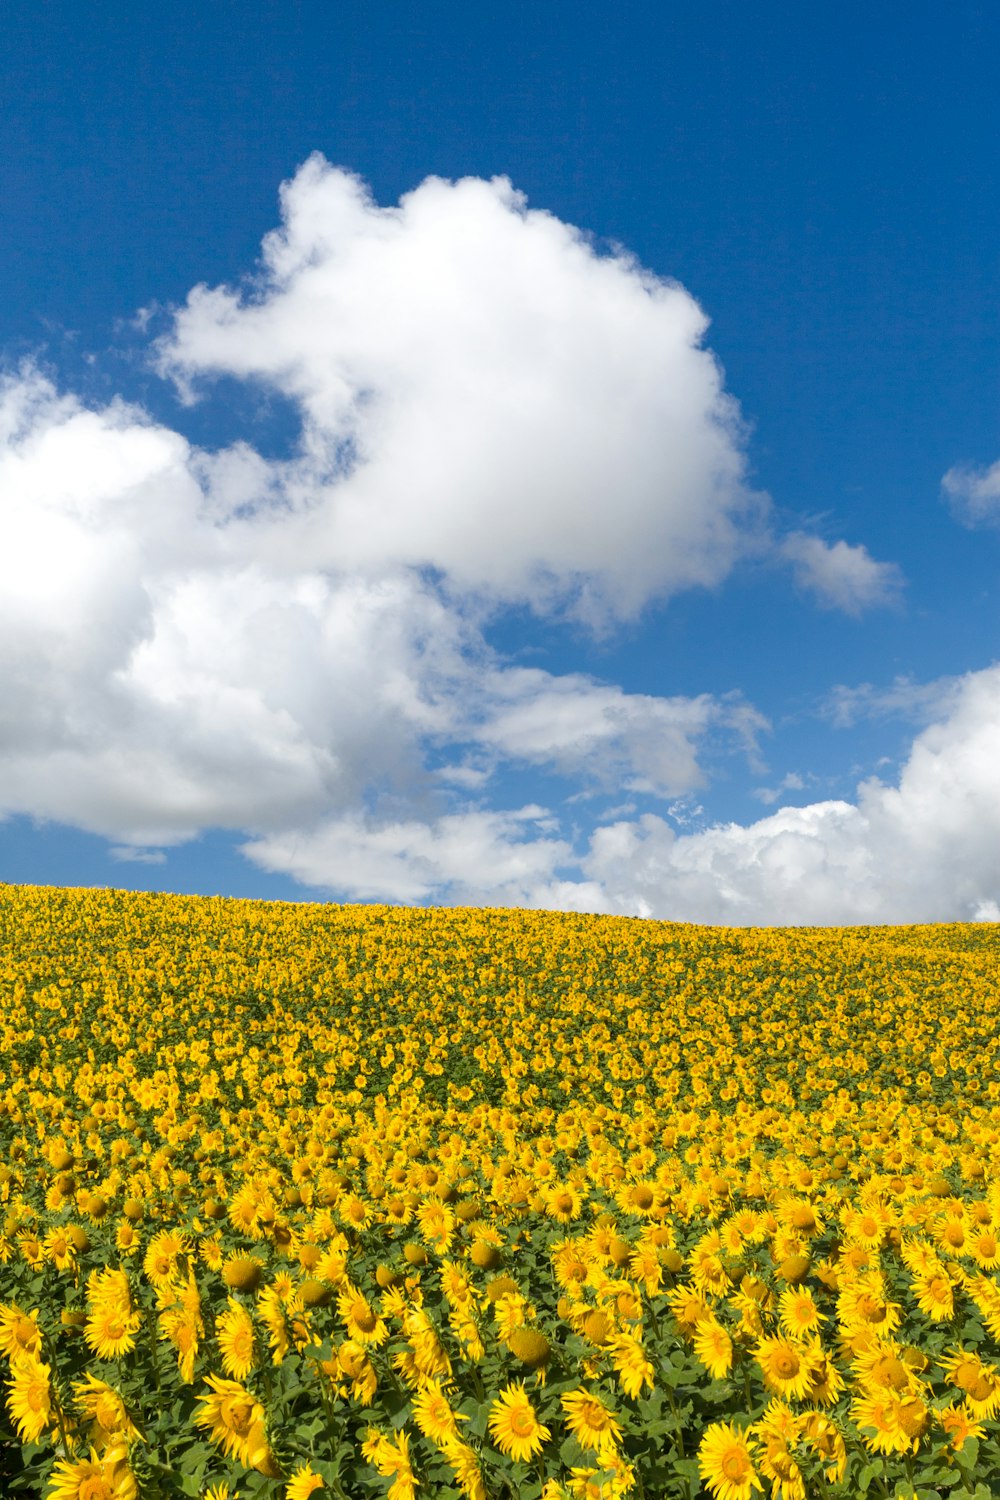 a field of sunflowers under a cloudy blue sky